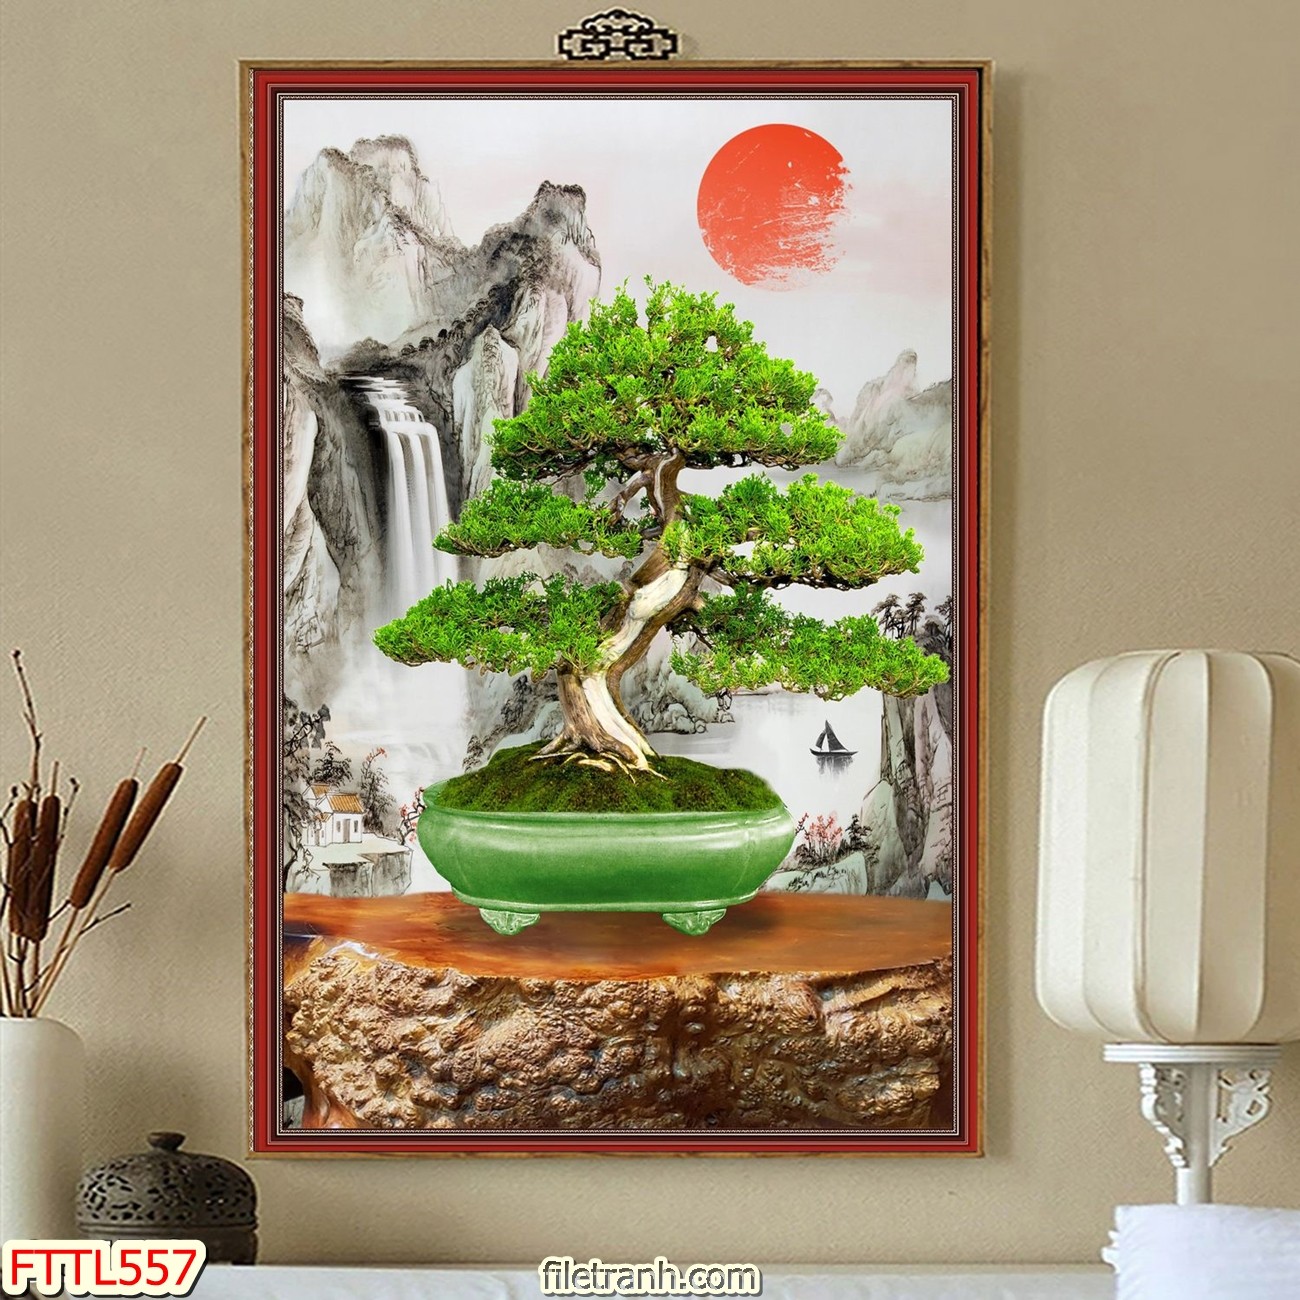 https://filetranh.com/file-tranh-chau-mai-bonsai/file-tranh-chau-mai-bonsai-fttl557.html